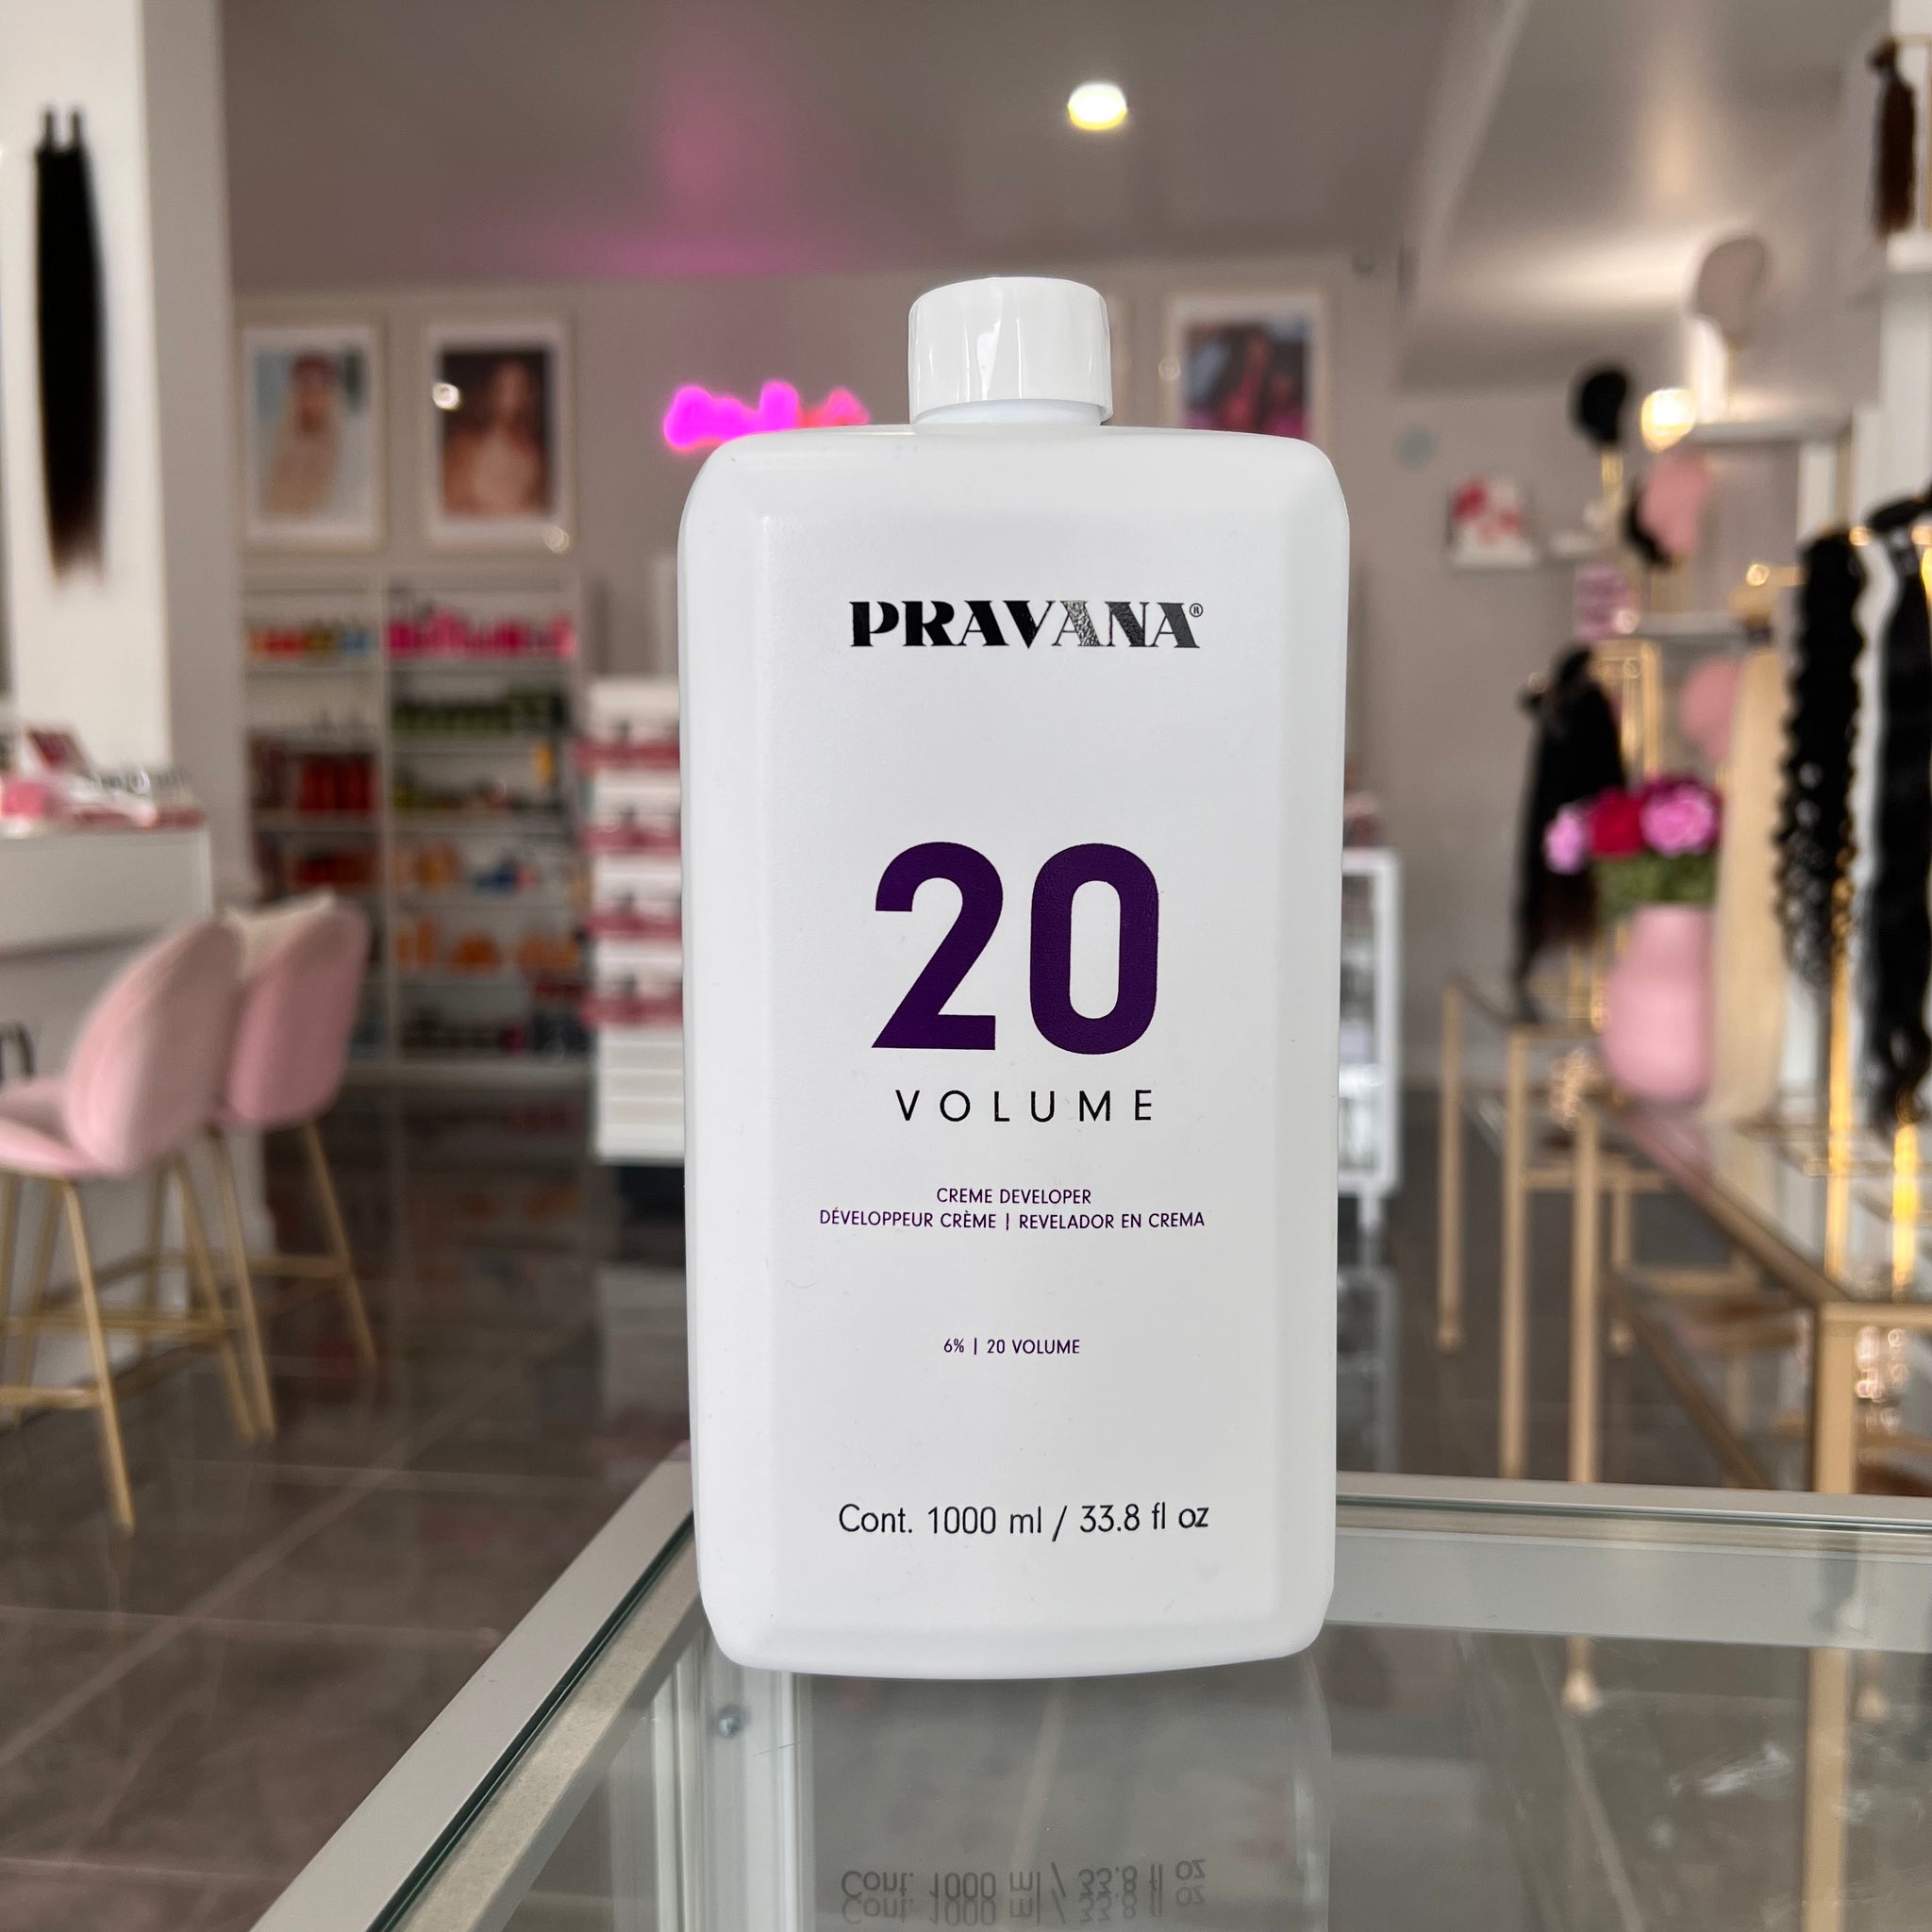 Pravana - Développeur crème ChromaSilk